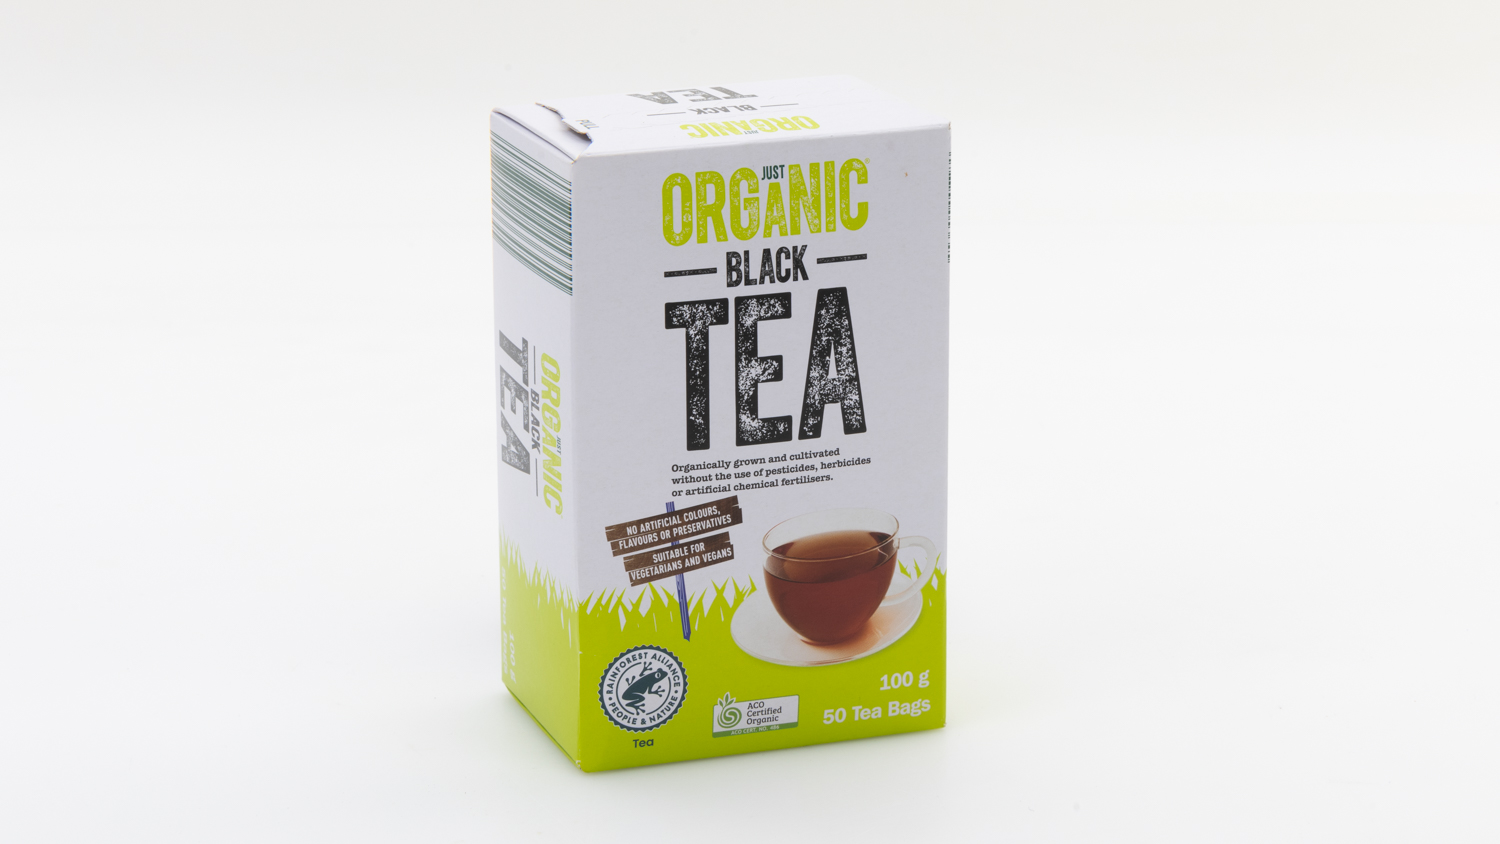 Just Organic (Aldi) Black Tea carousel image